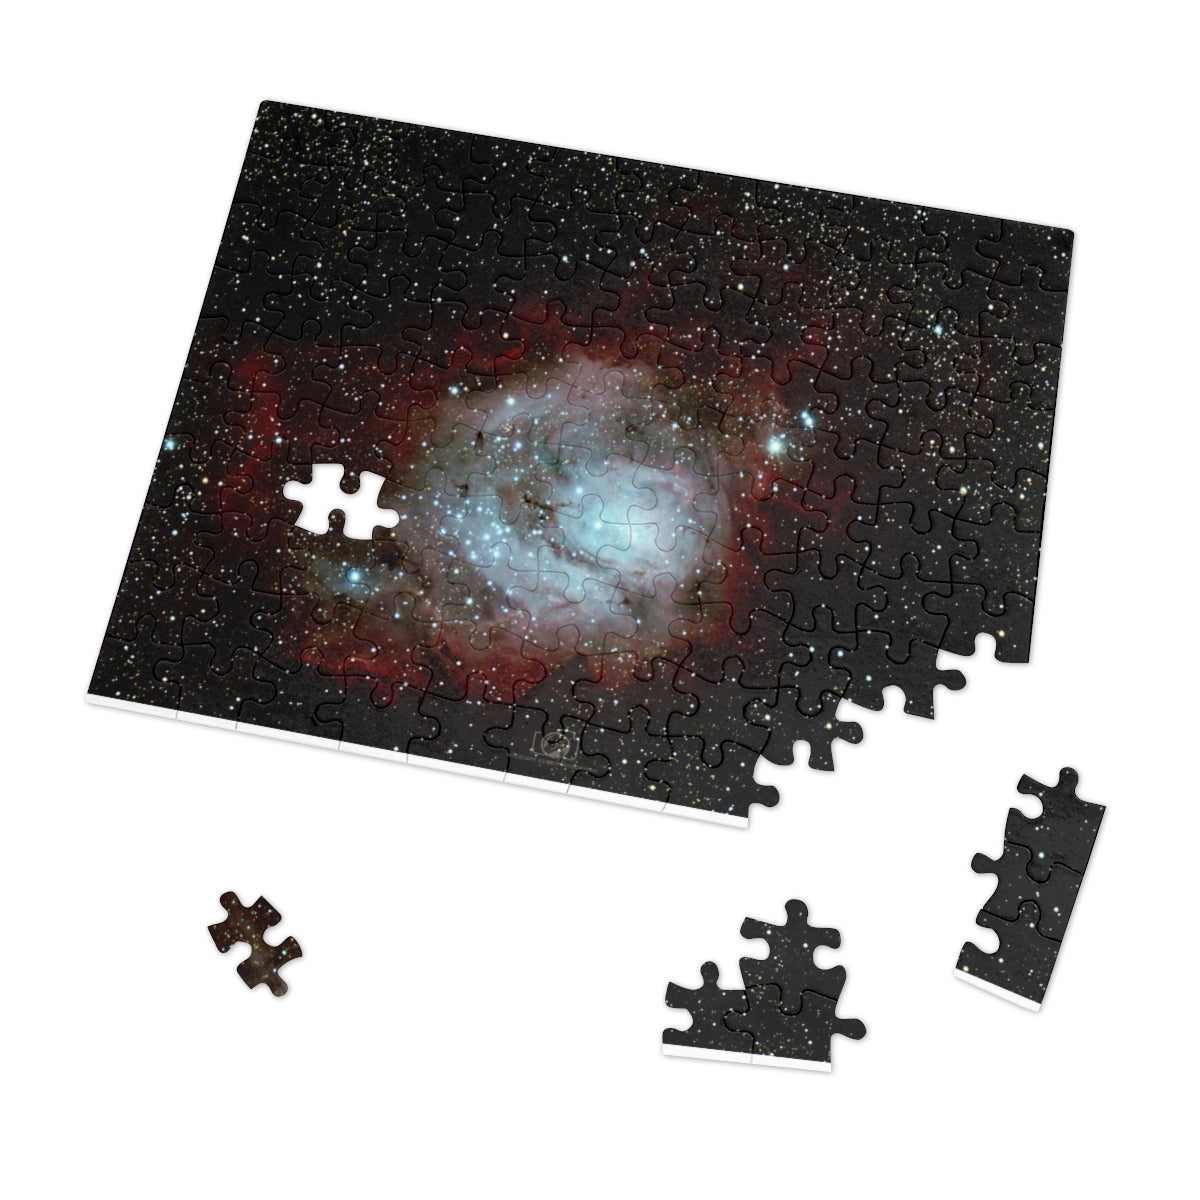 Educational Educational Jigsaw Puzzle:  Lagoon Nebula